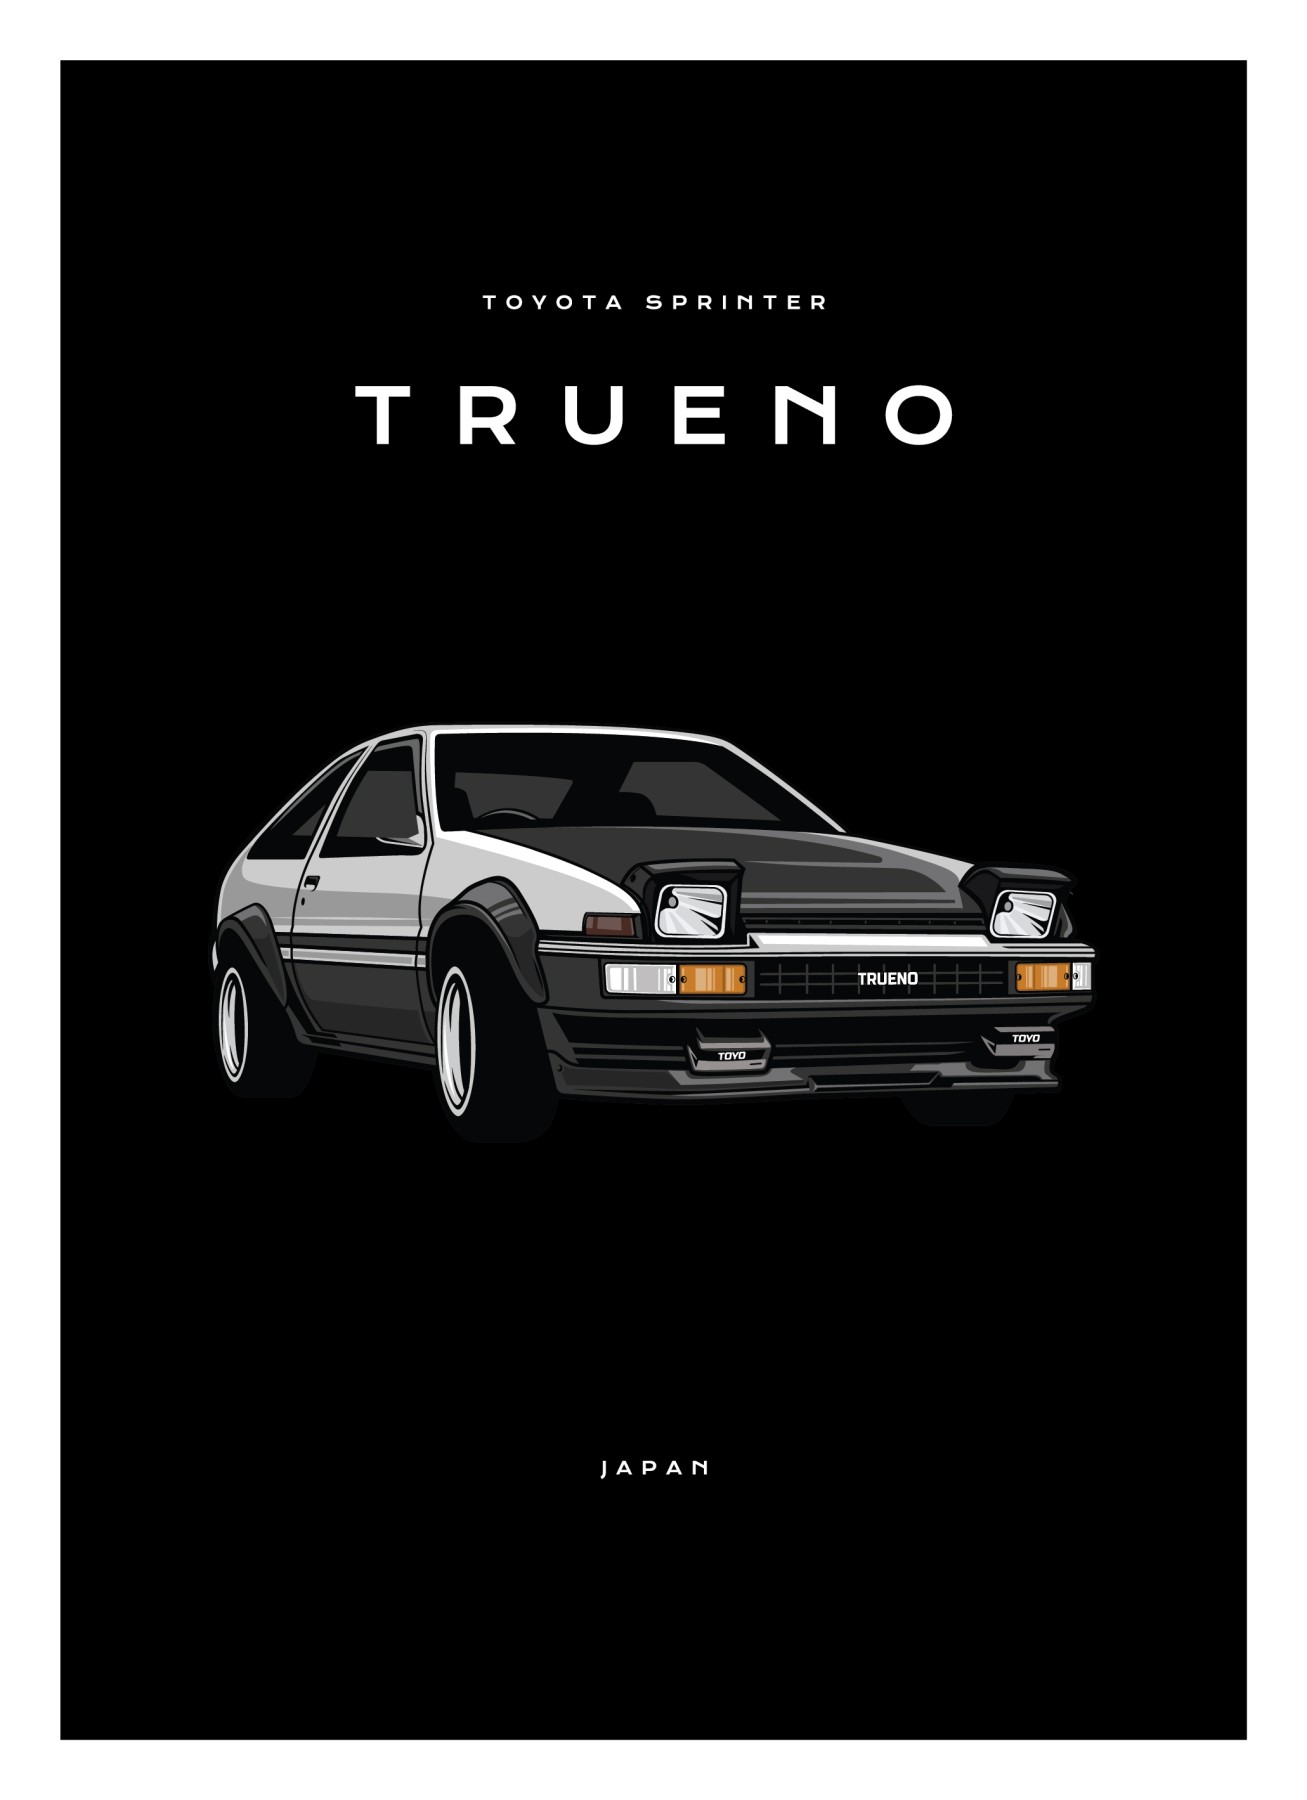 Toyota Sprinter - Trueno - Black